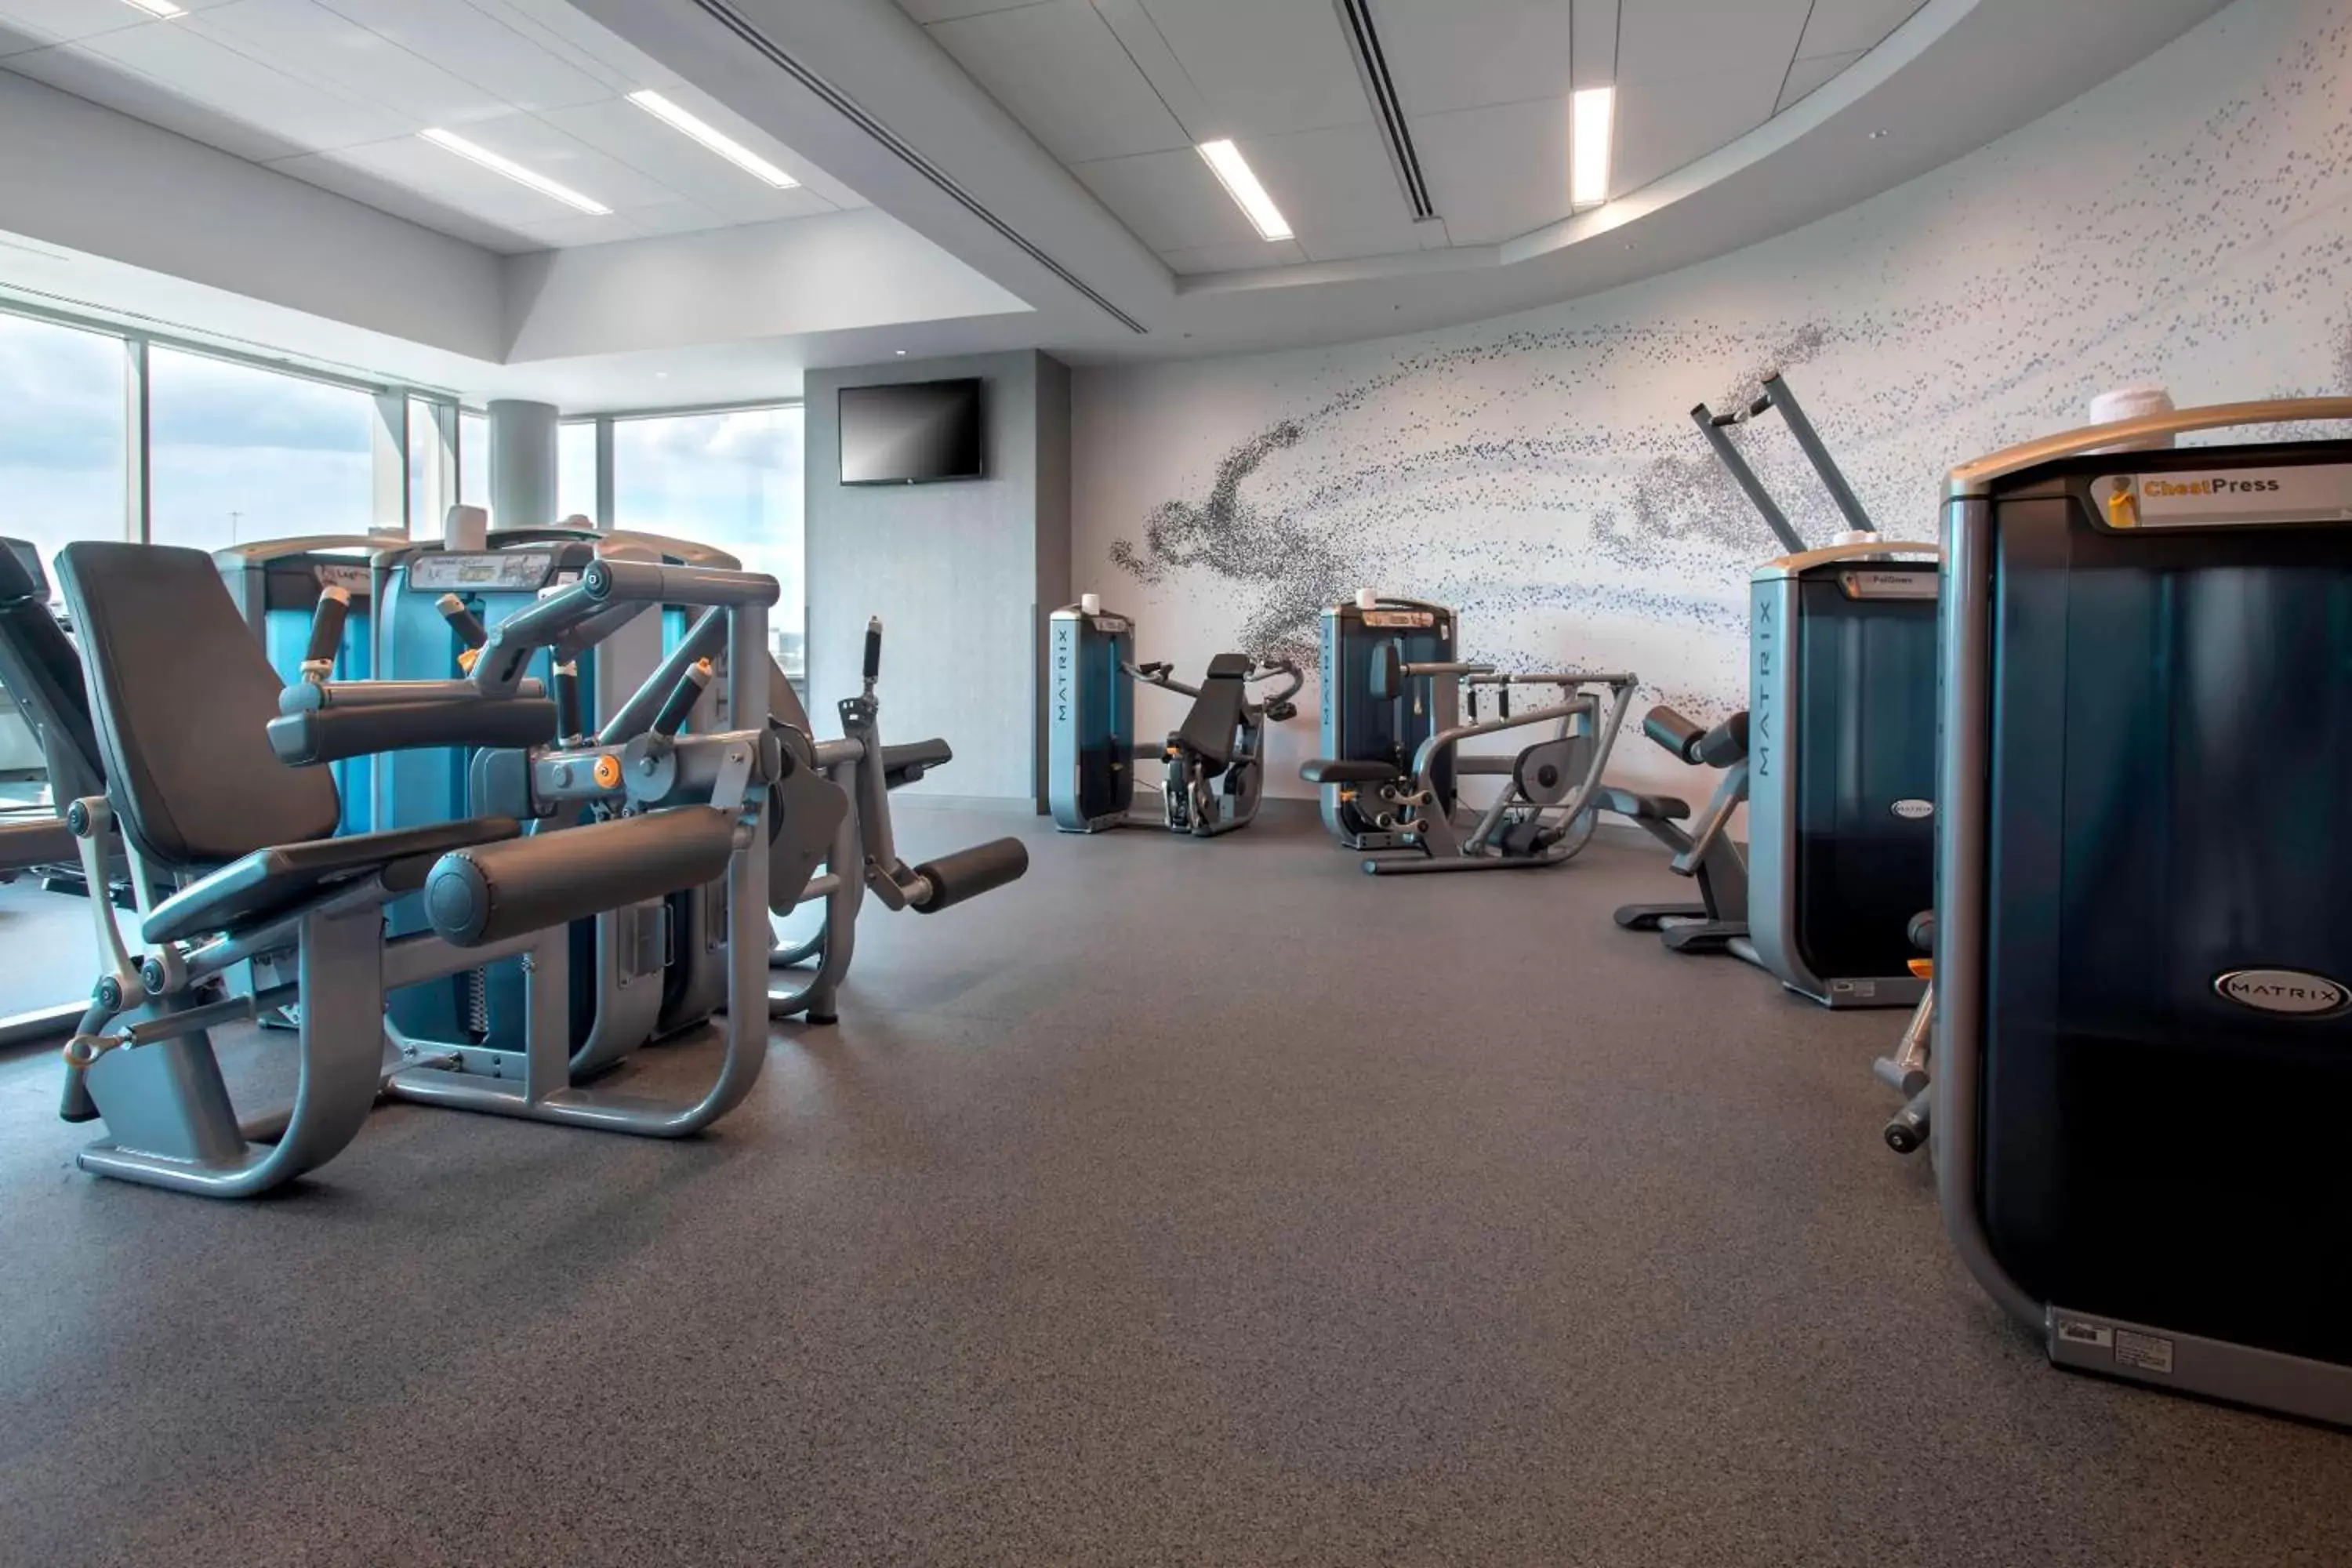 Fitness centre/facilities, Fitness Center/Facilities in Philadelphia Airport Marriott